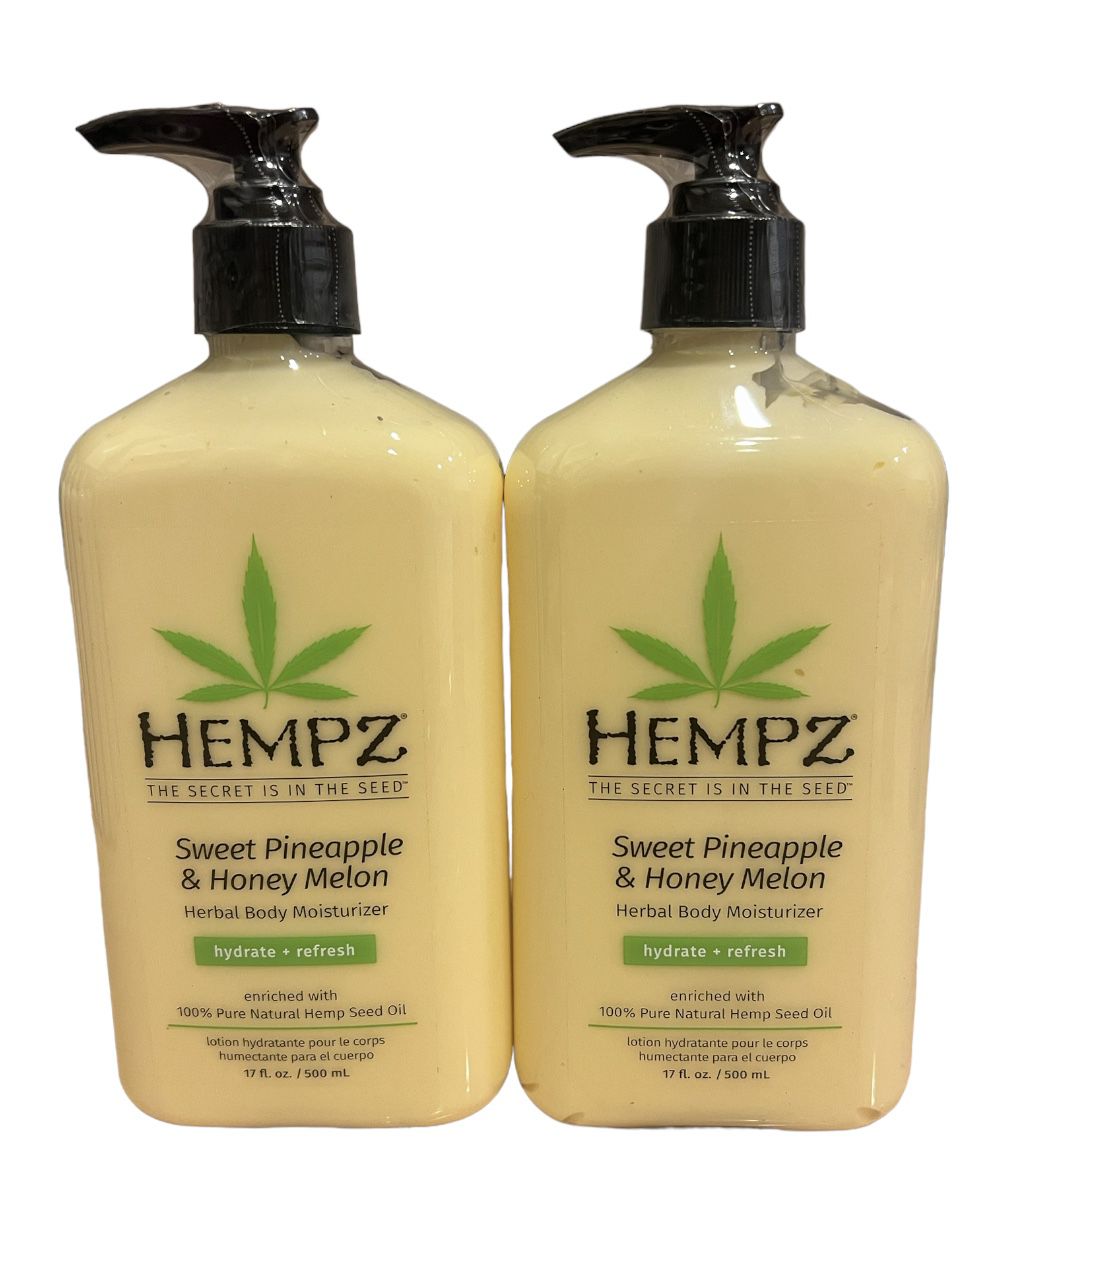 2 HEMPZ SWEET PINEAPPLE & HONEY MELON Daily Herbal Body Moisturizer Lotion 17 oz